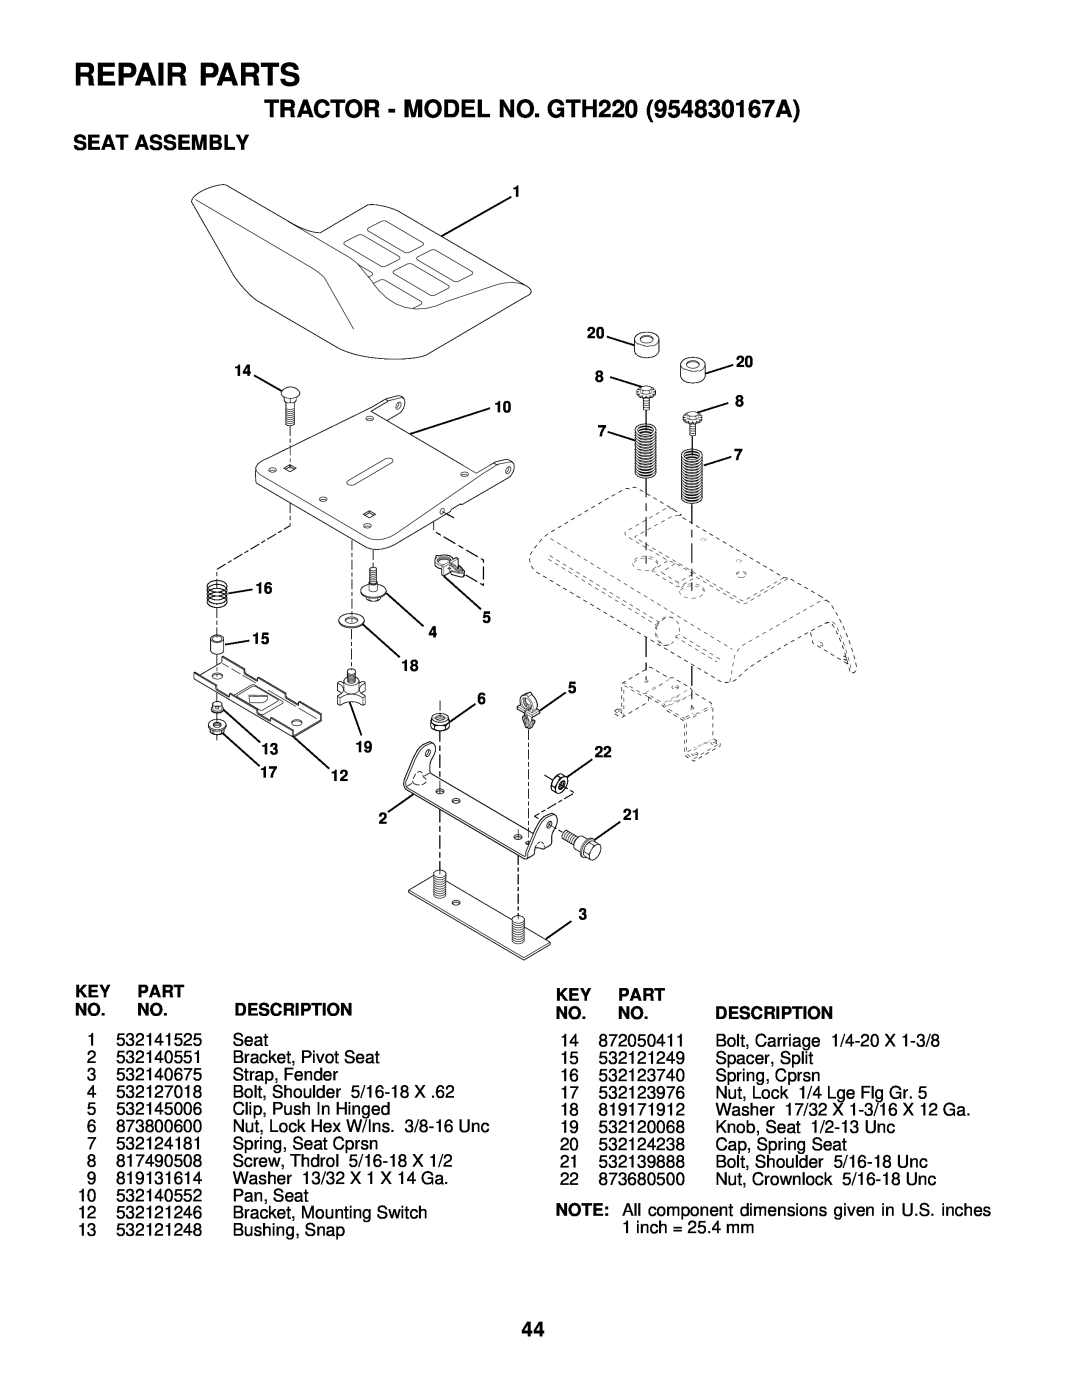 Husqvarna owner manual Seat Assembly, Repair Parts, TRACTOR - MODEL NO. GTH220 954830167A, Description 